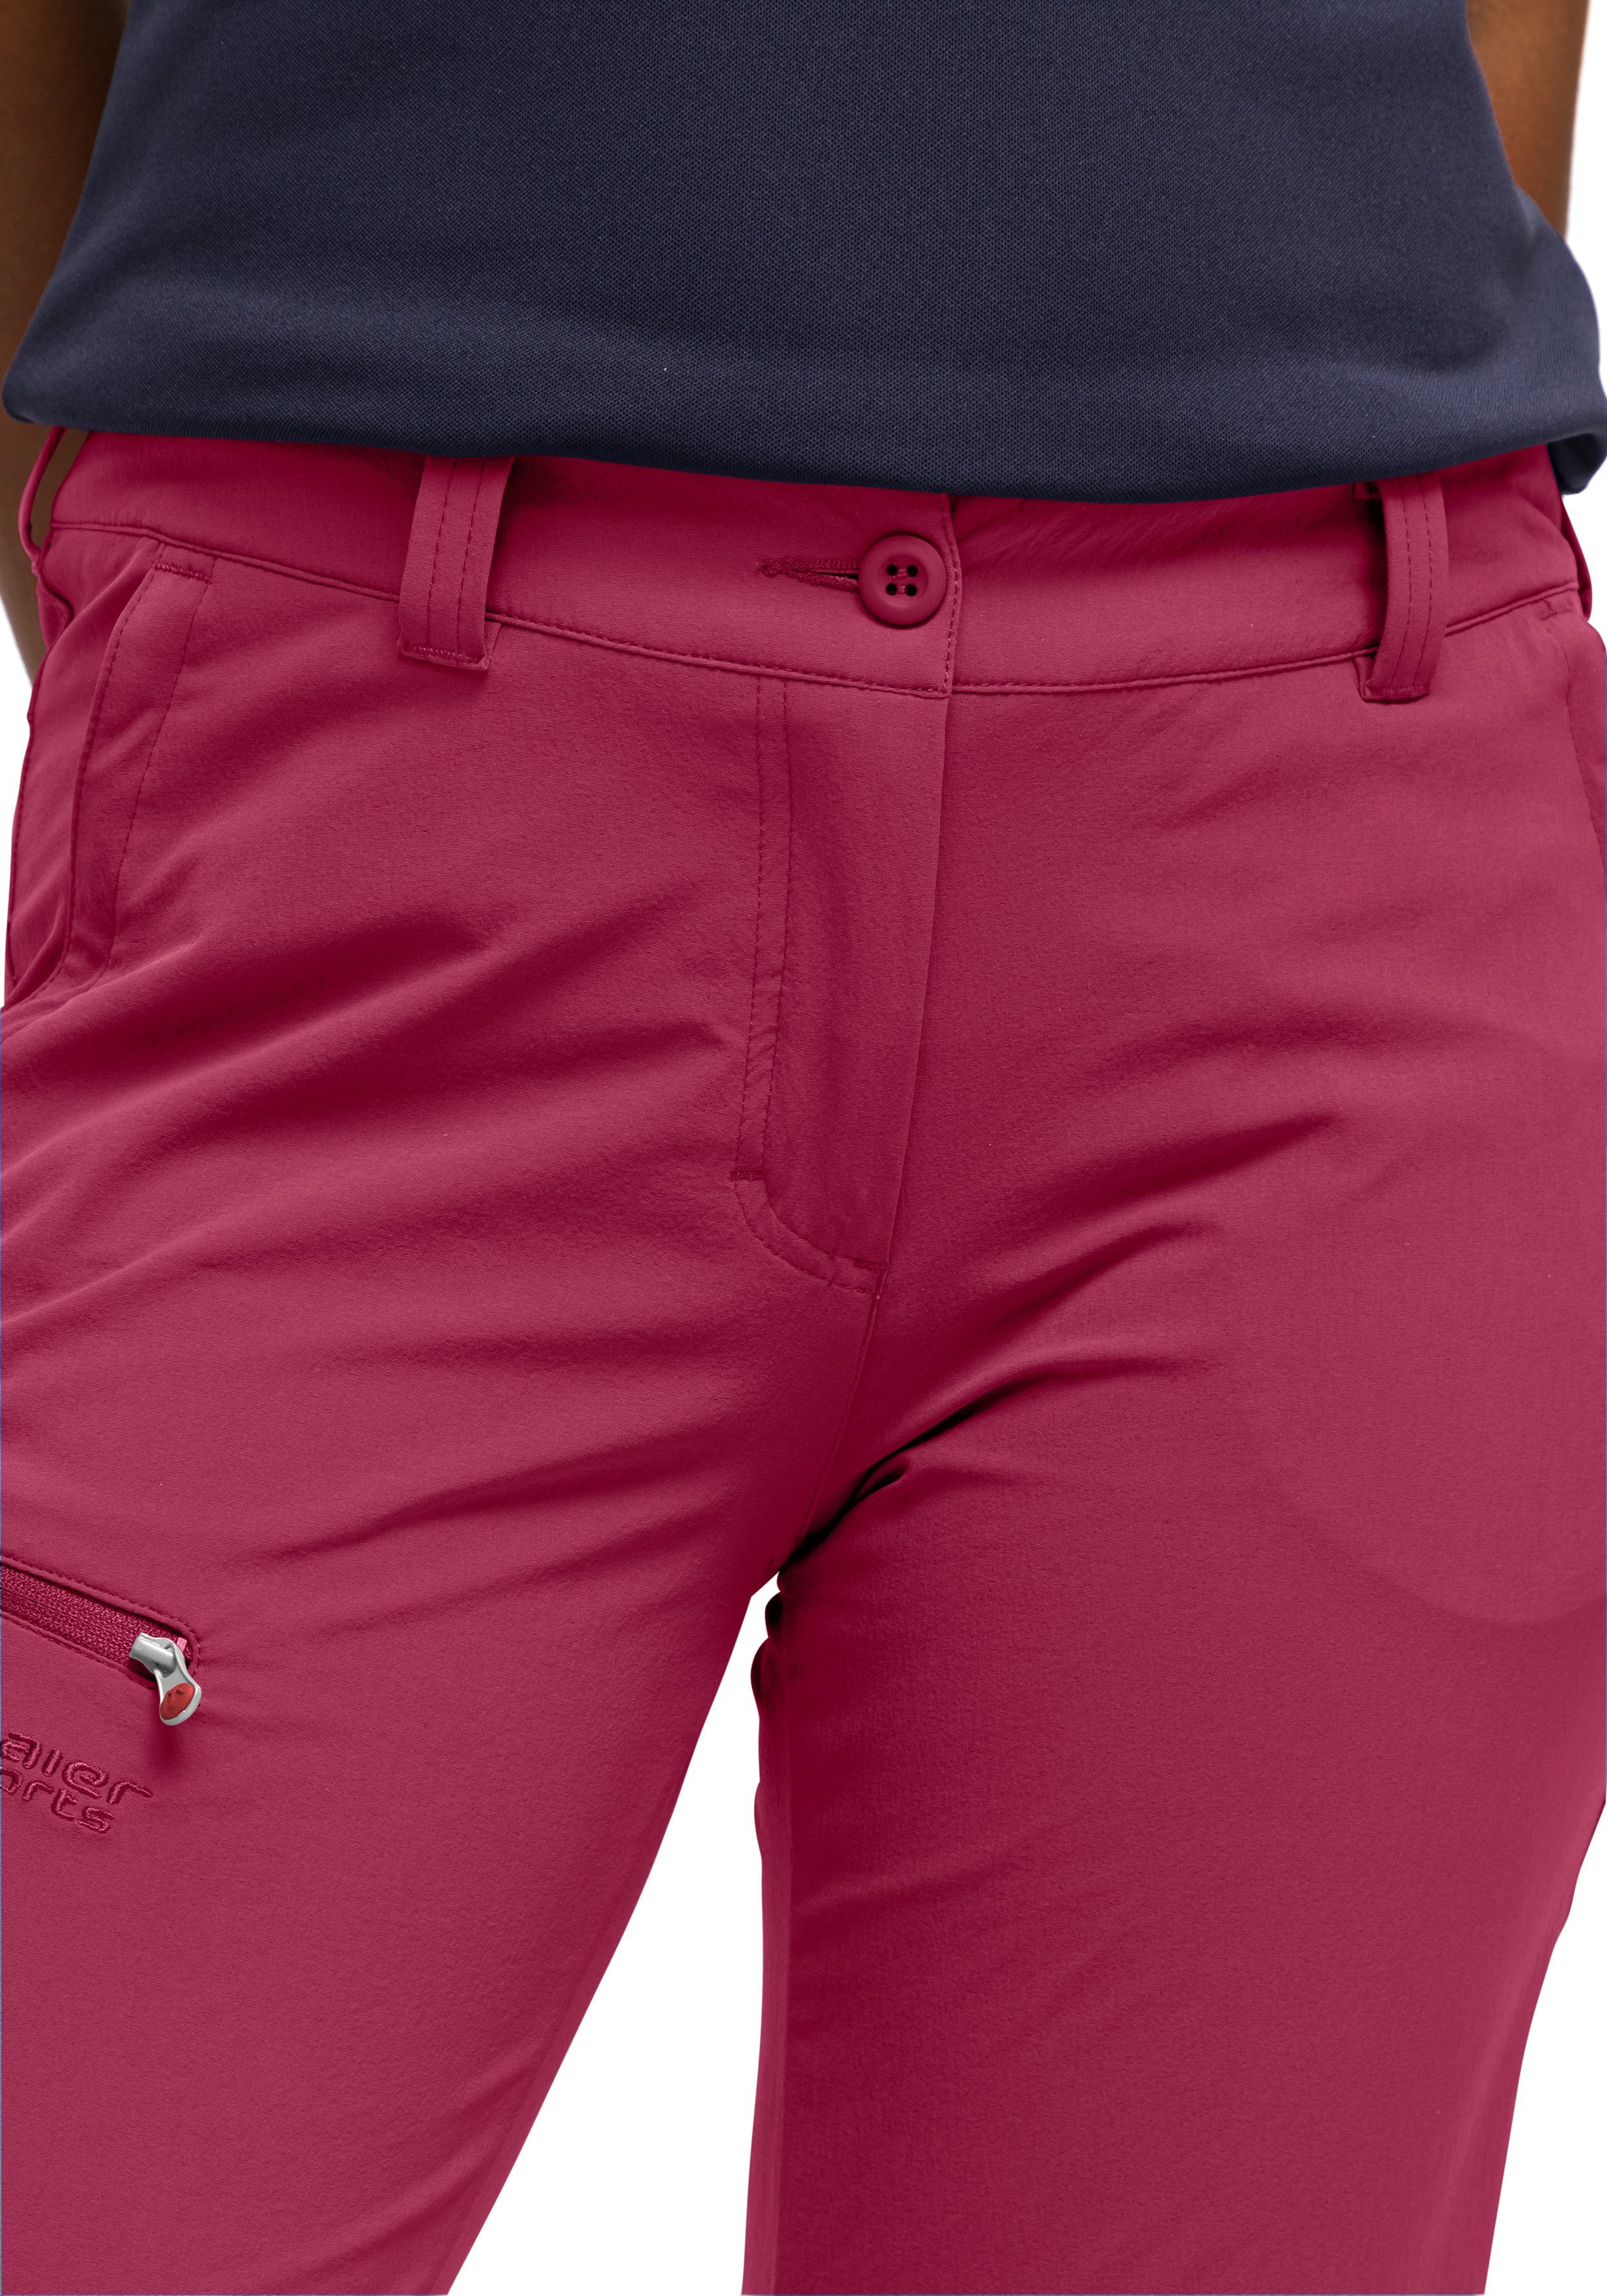 Sports Damen Outdoor-Hose Inara Material Maier purpurrot Wanderhose, slim Funktionshose aus elastischem